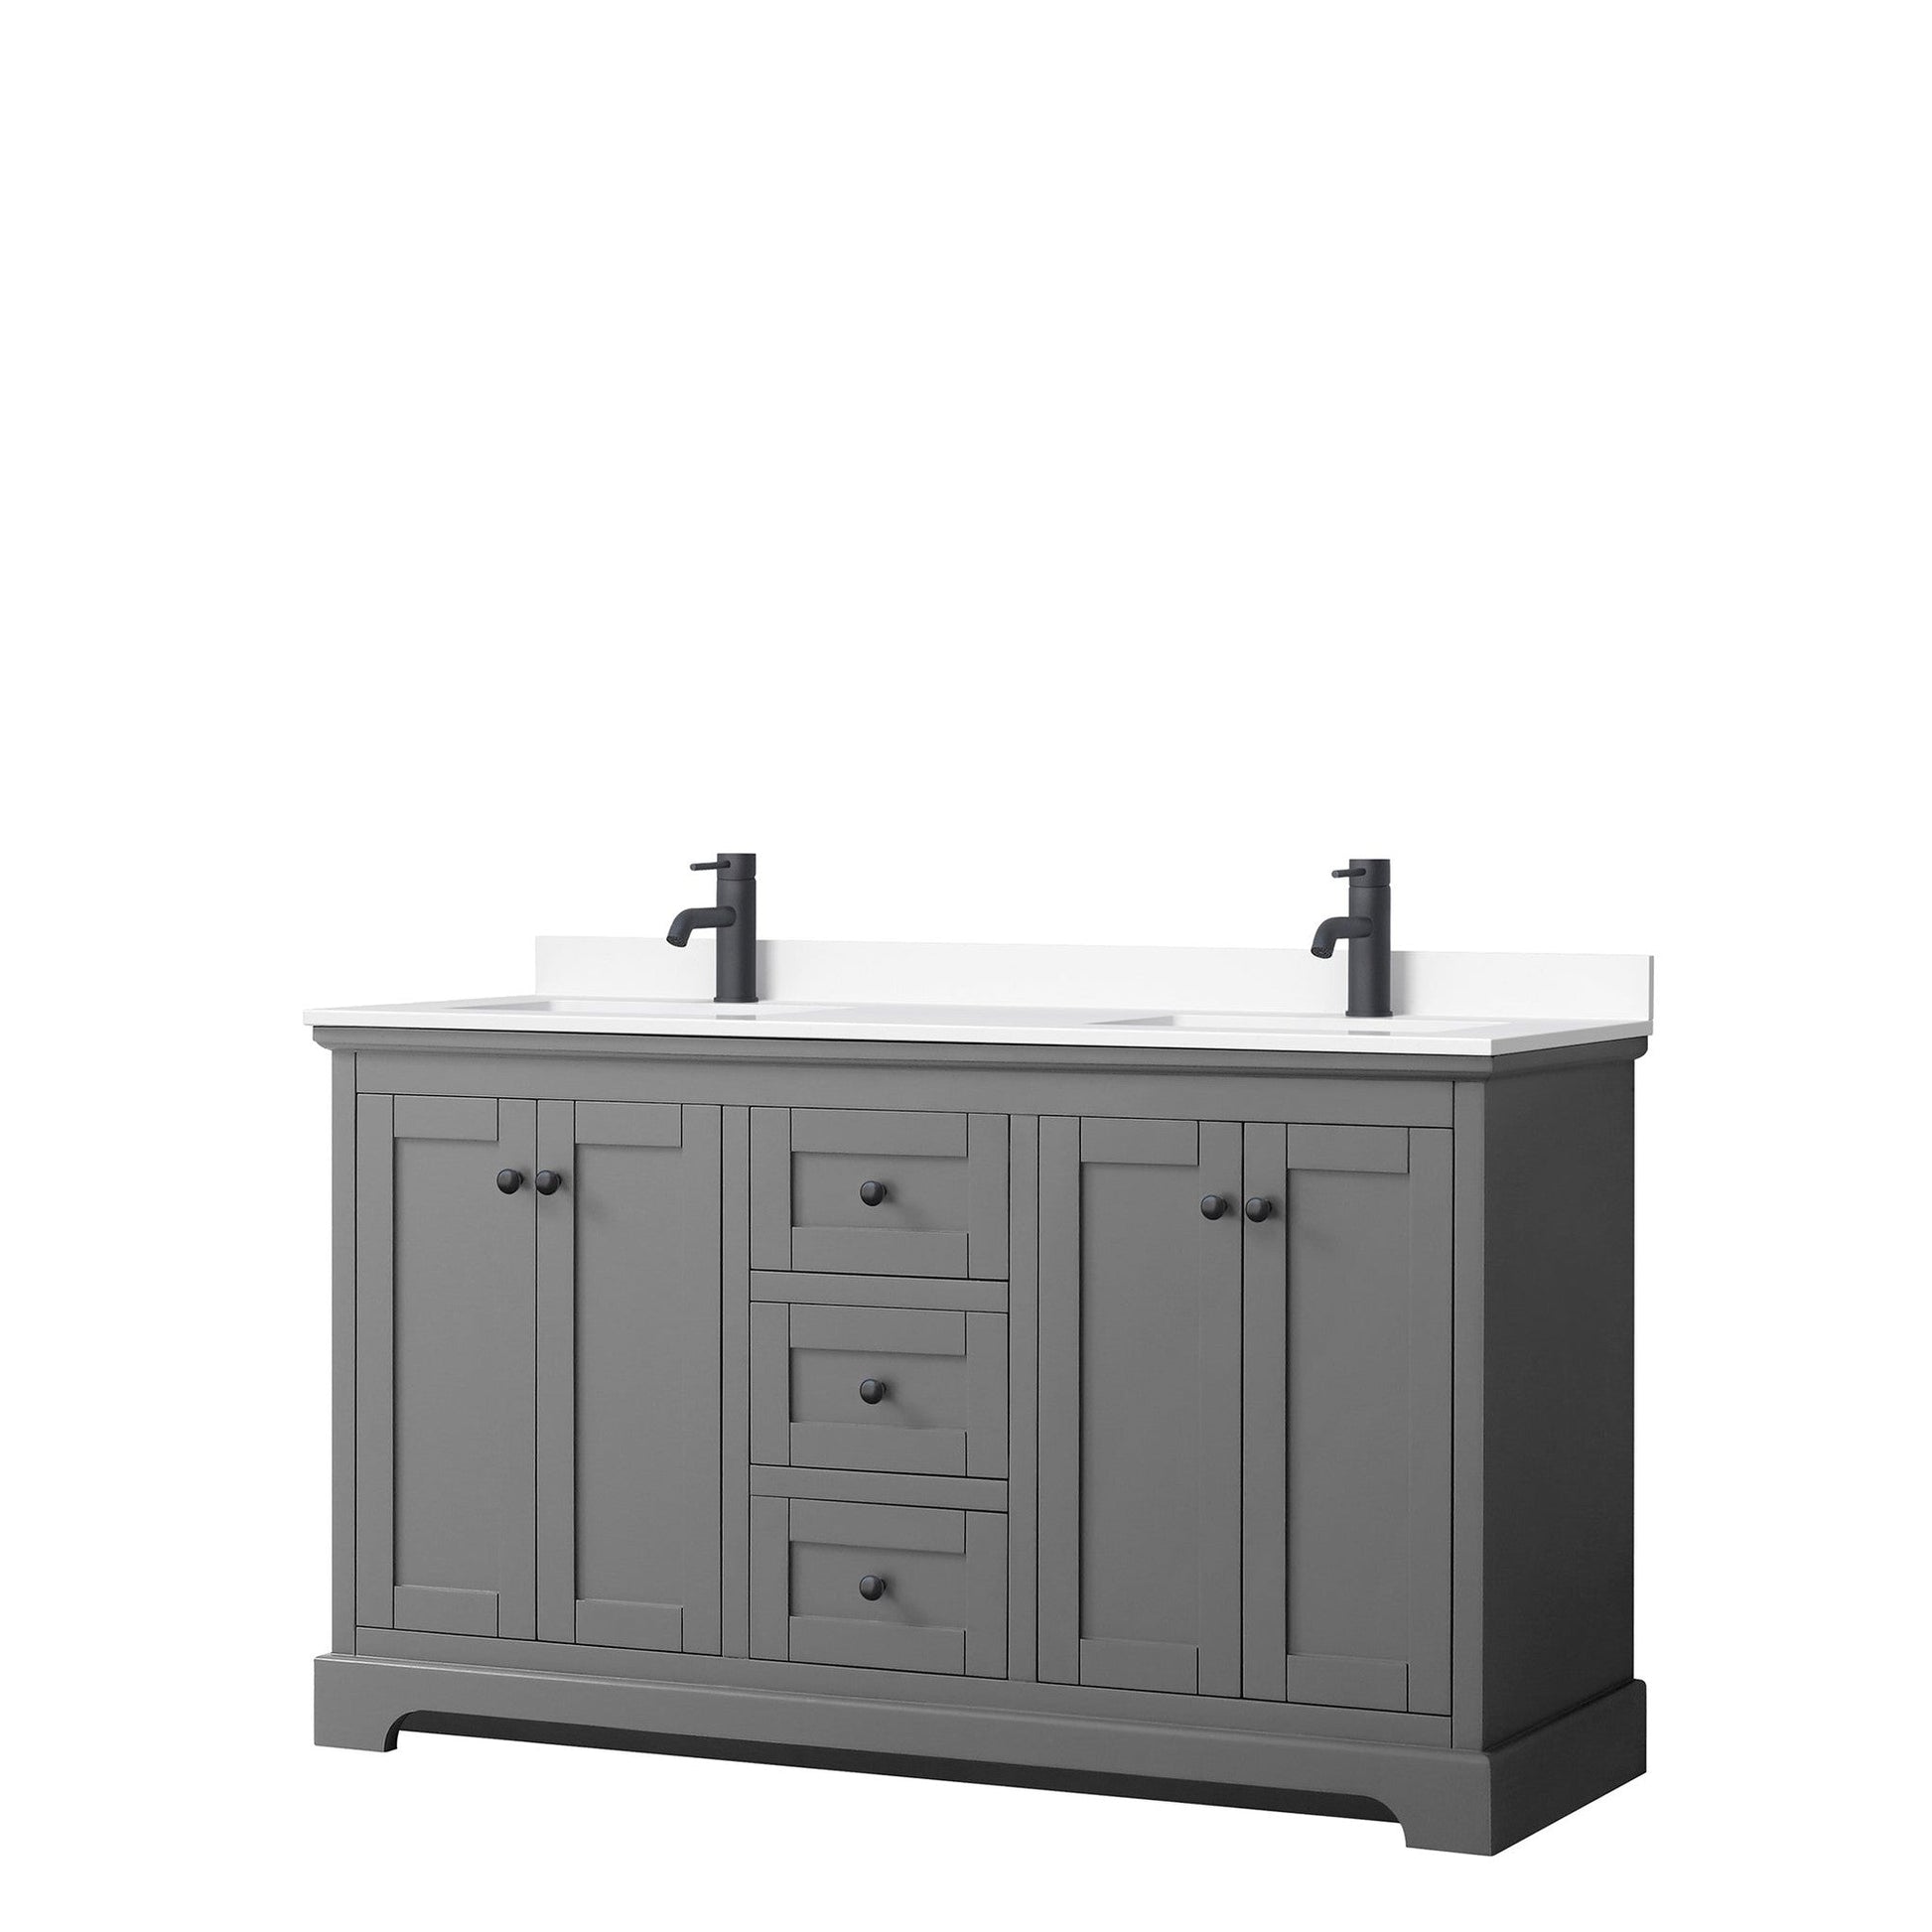 Avery 60" Double Bathroom Vanity in Dark Gray, White Cultured Marble Countertop, Undermount Square Sinks, Matte Black Trim